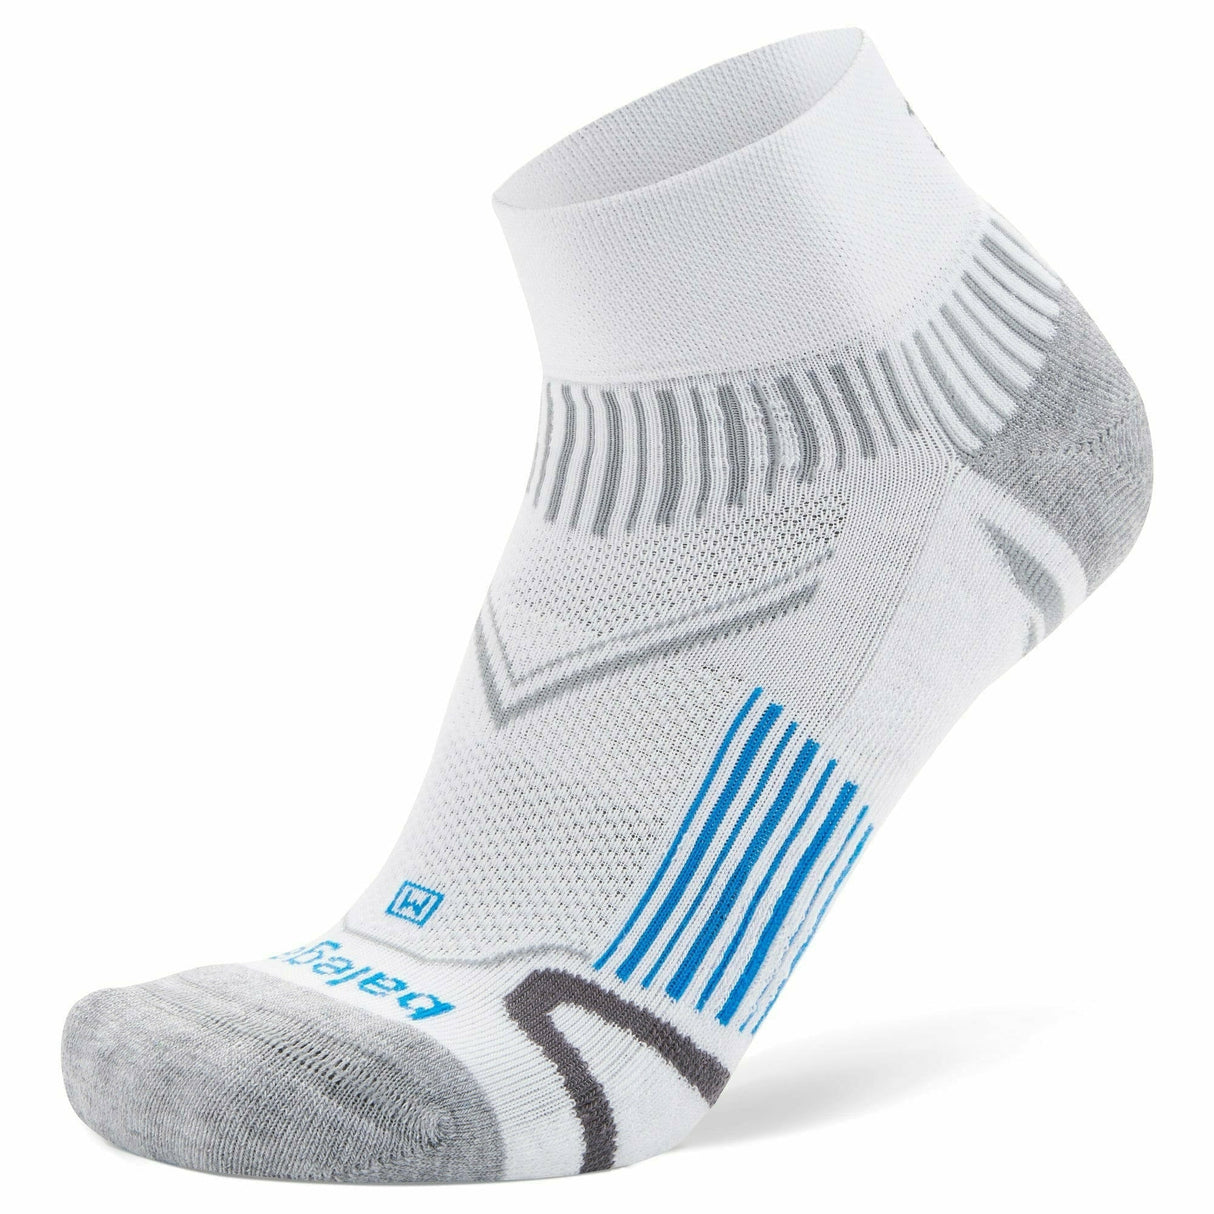 Balega Enduro Quarter Socks  -  Small / White/Blue / Current Season